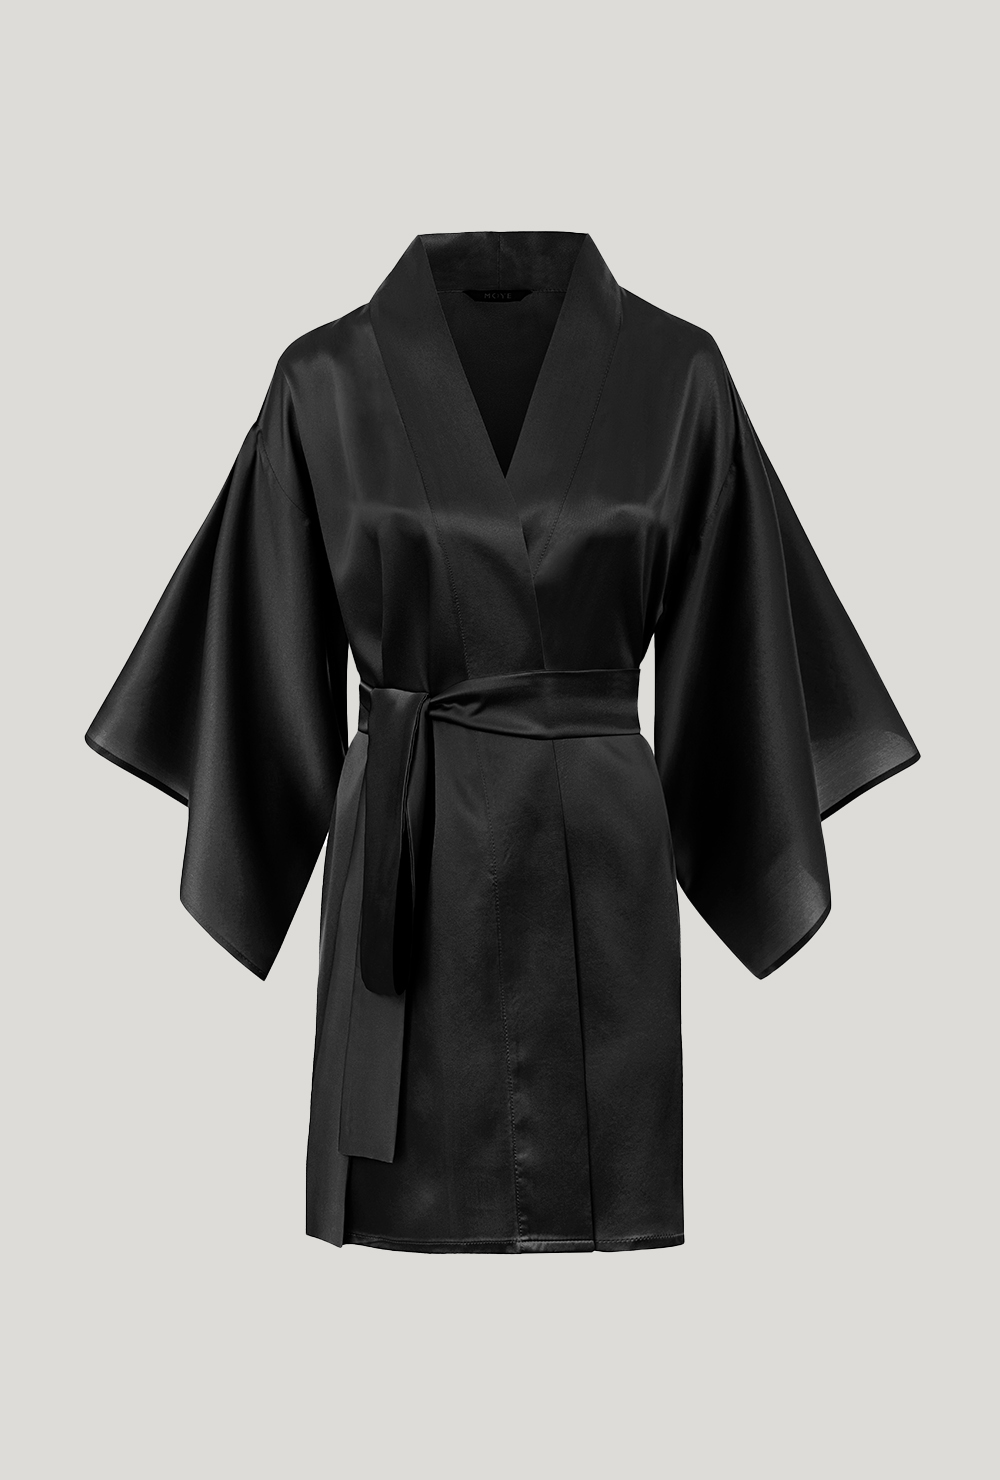 Black silk kimono robe Czarne jedwabne kimono